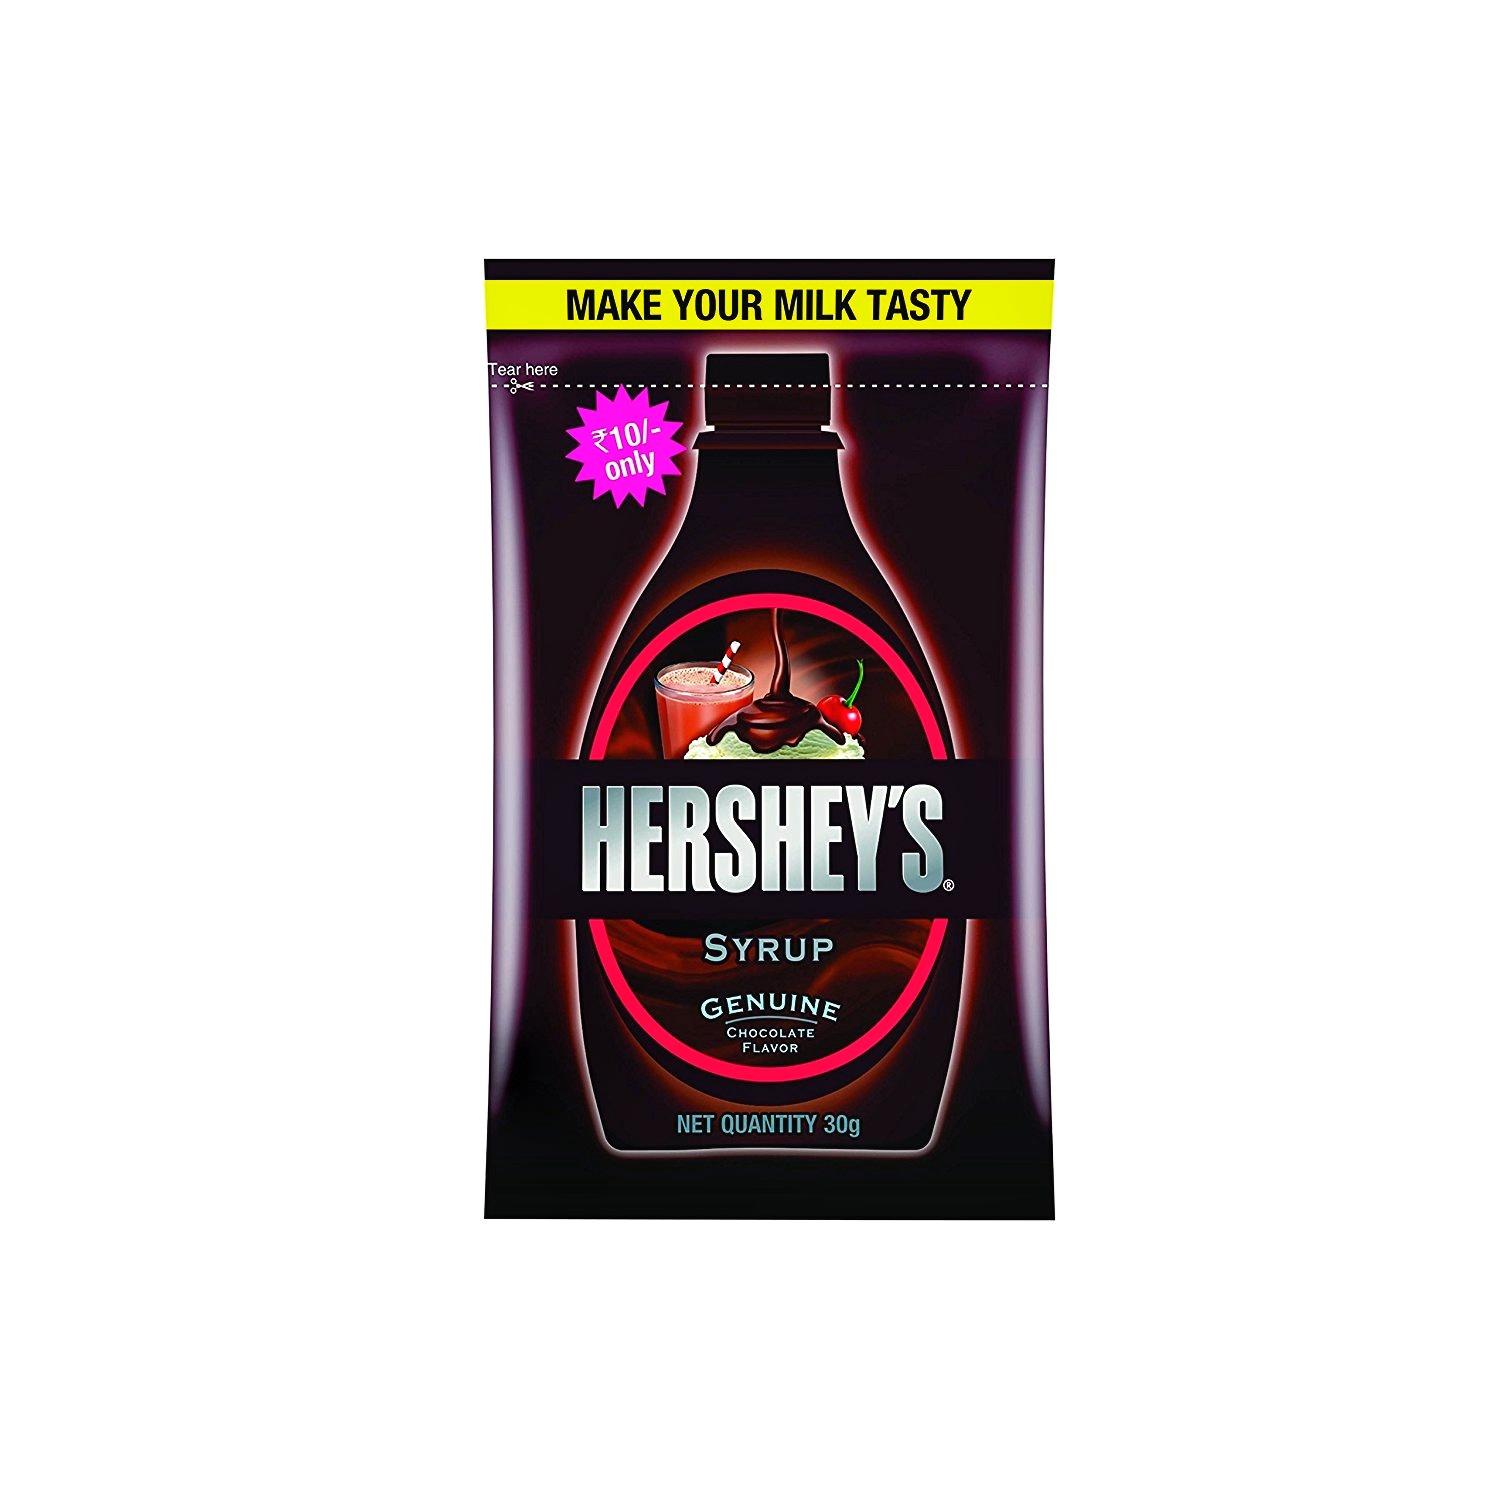 Hershey's SYRUP genuine Chocolate Flavor